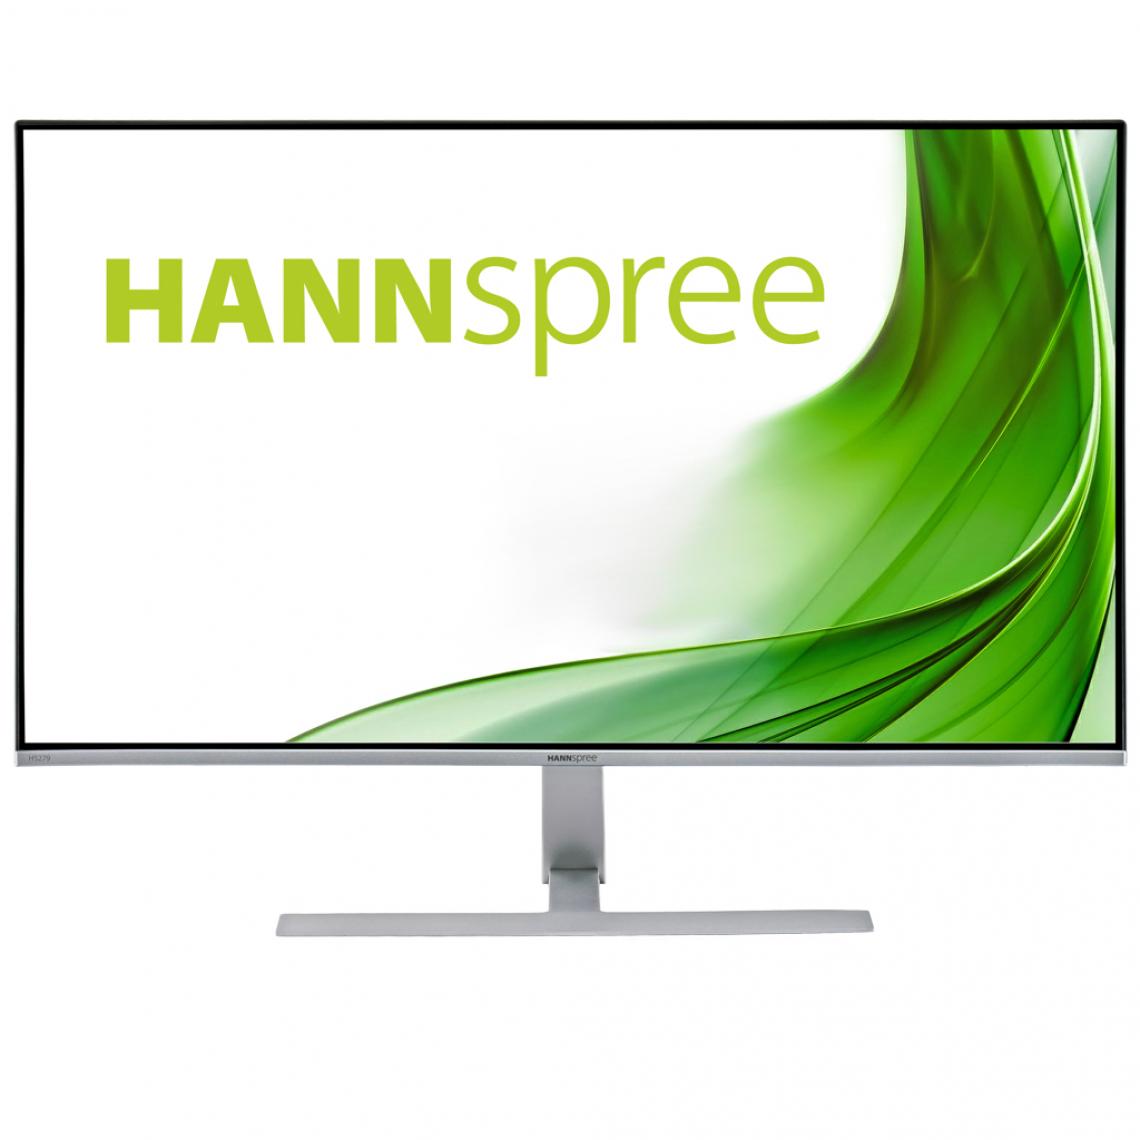 Hannspree - Hannspree HS249PSB LED display - Moniteur PC